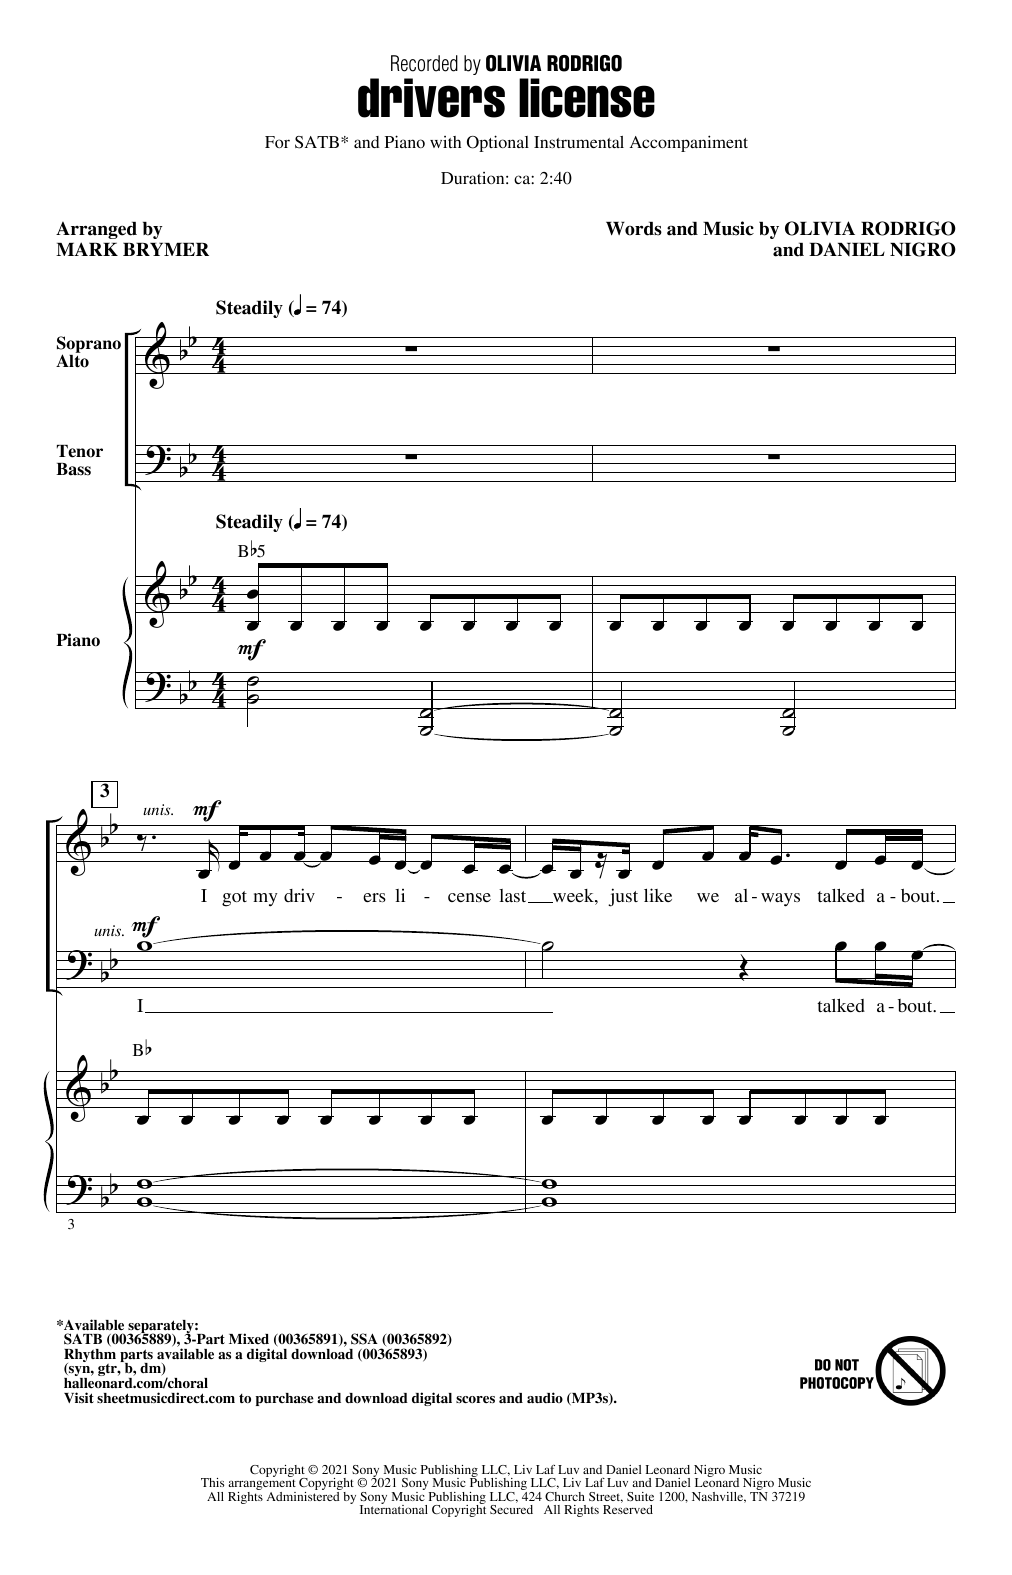 Olivia Rodrigo drivers license (arr. Mark Brymer) sheet music notes and chords arranged for SATB Choir